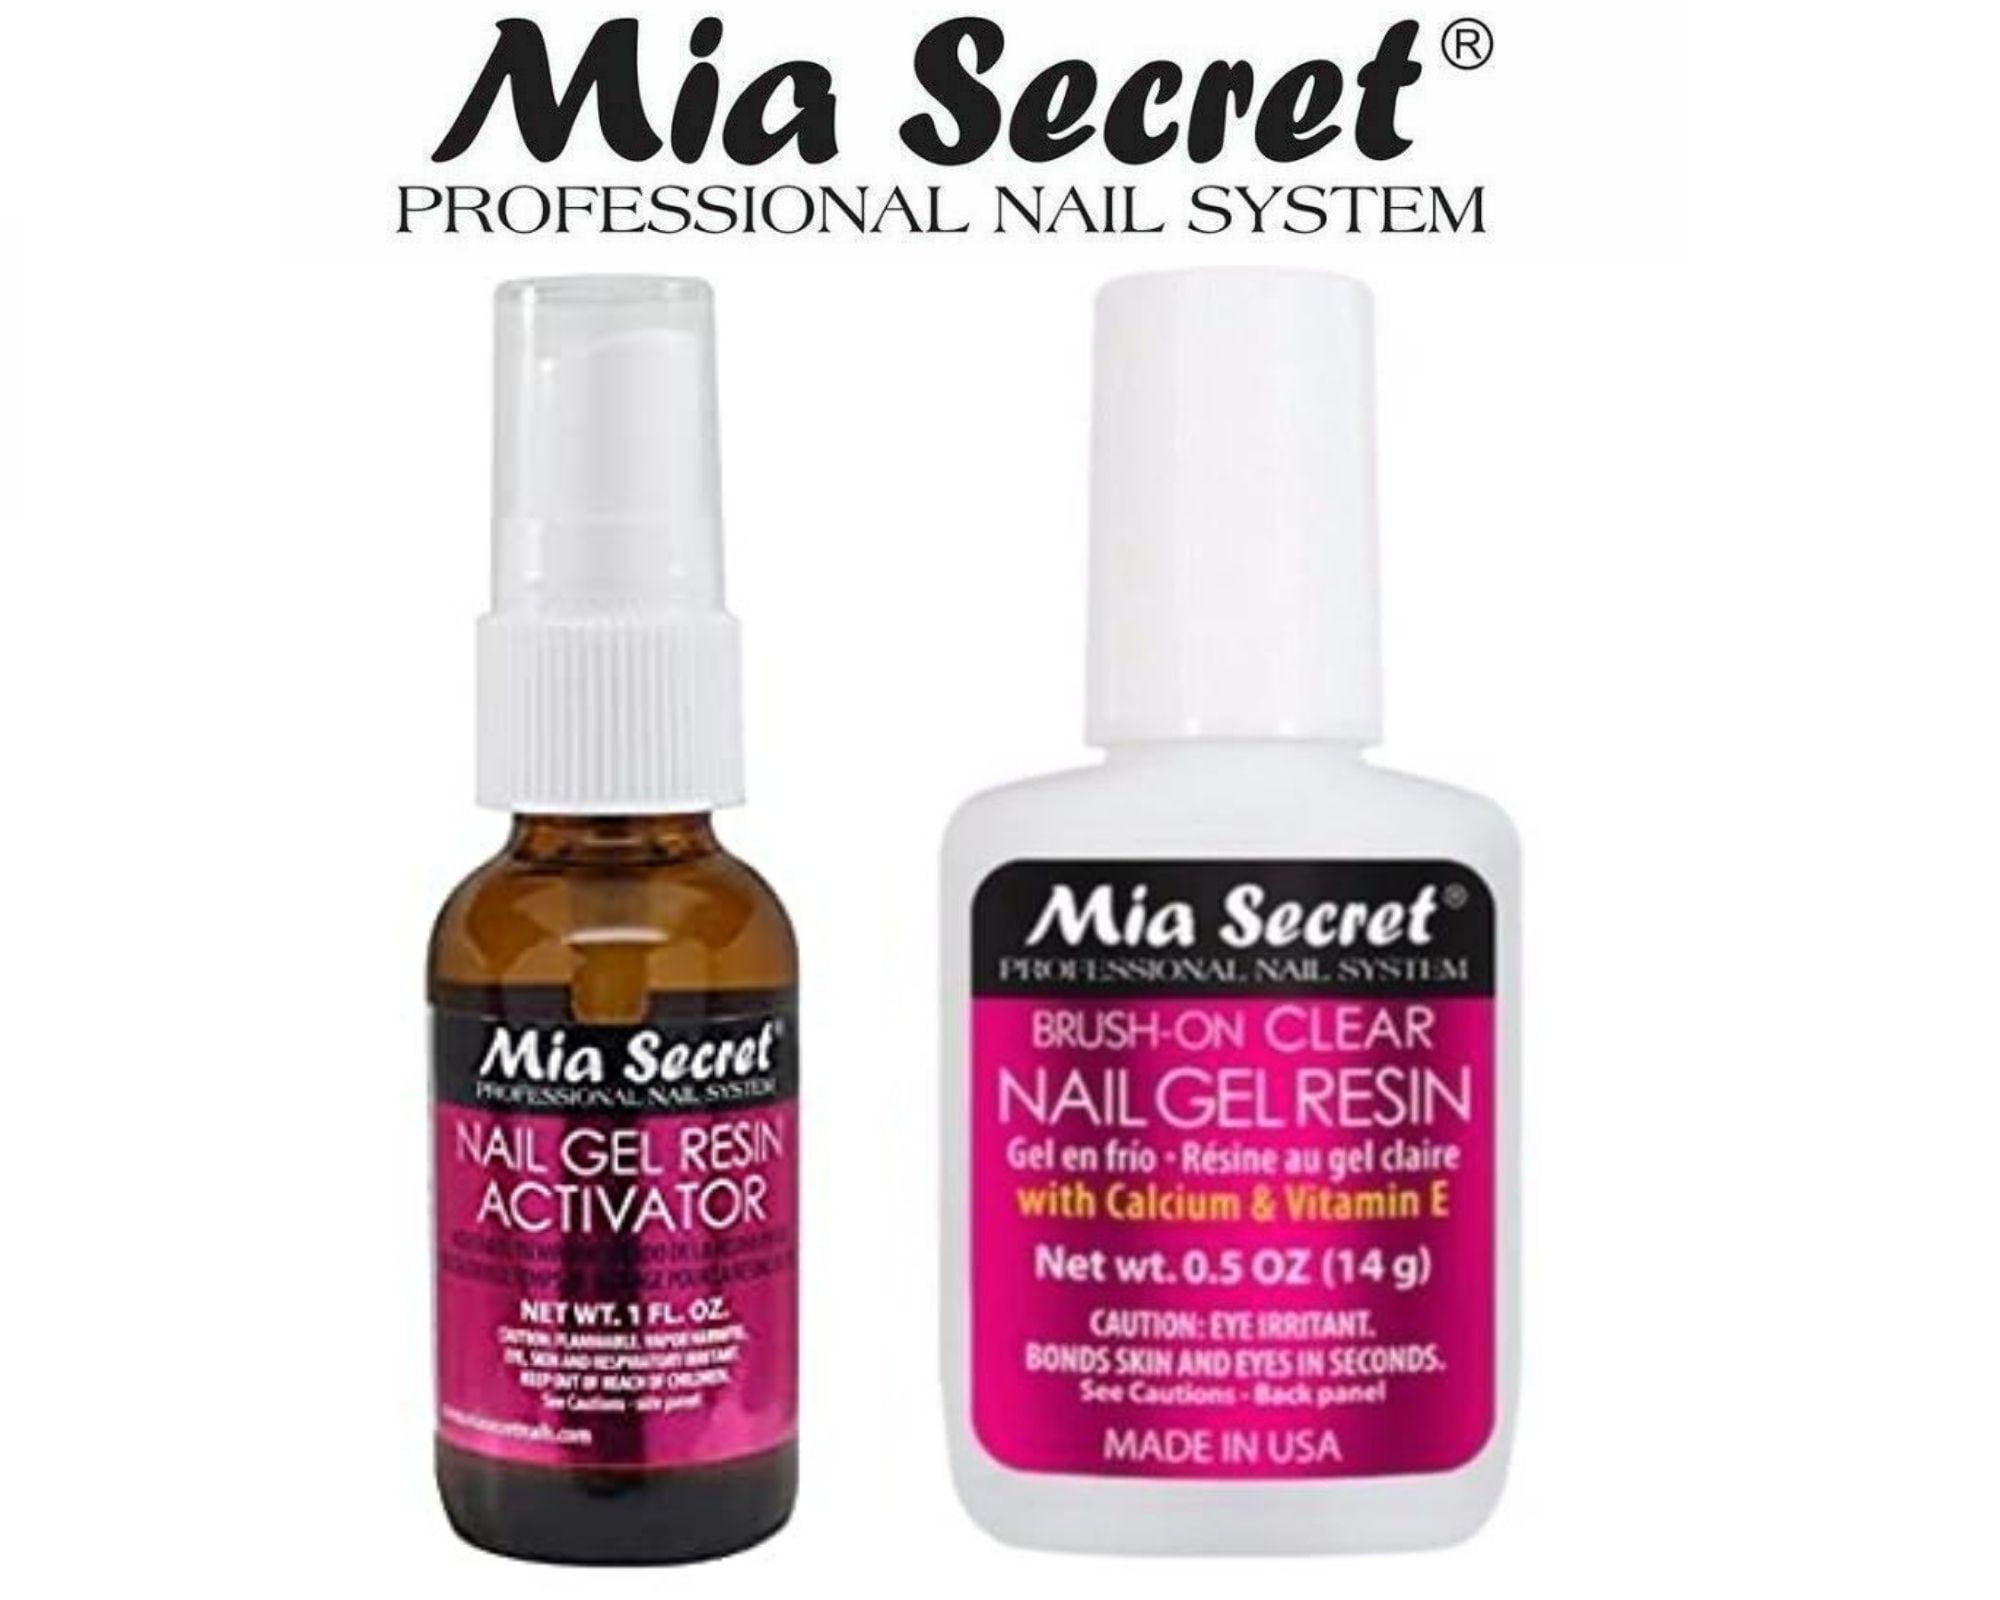 Mia Secret Clear Nail Gel Resin